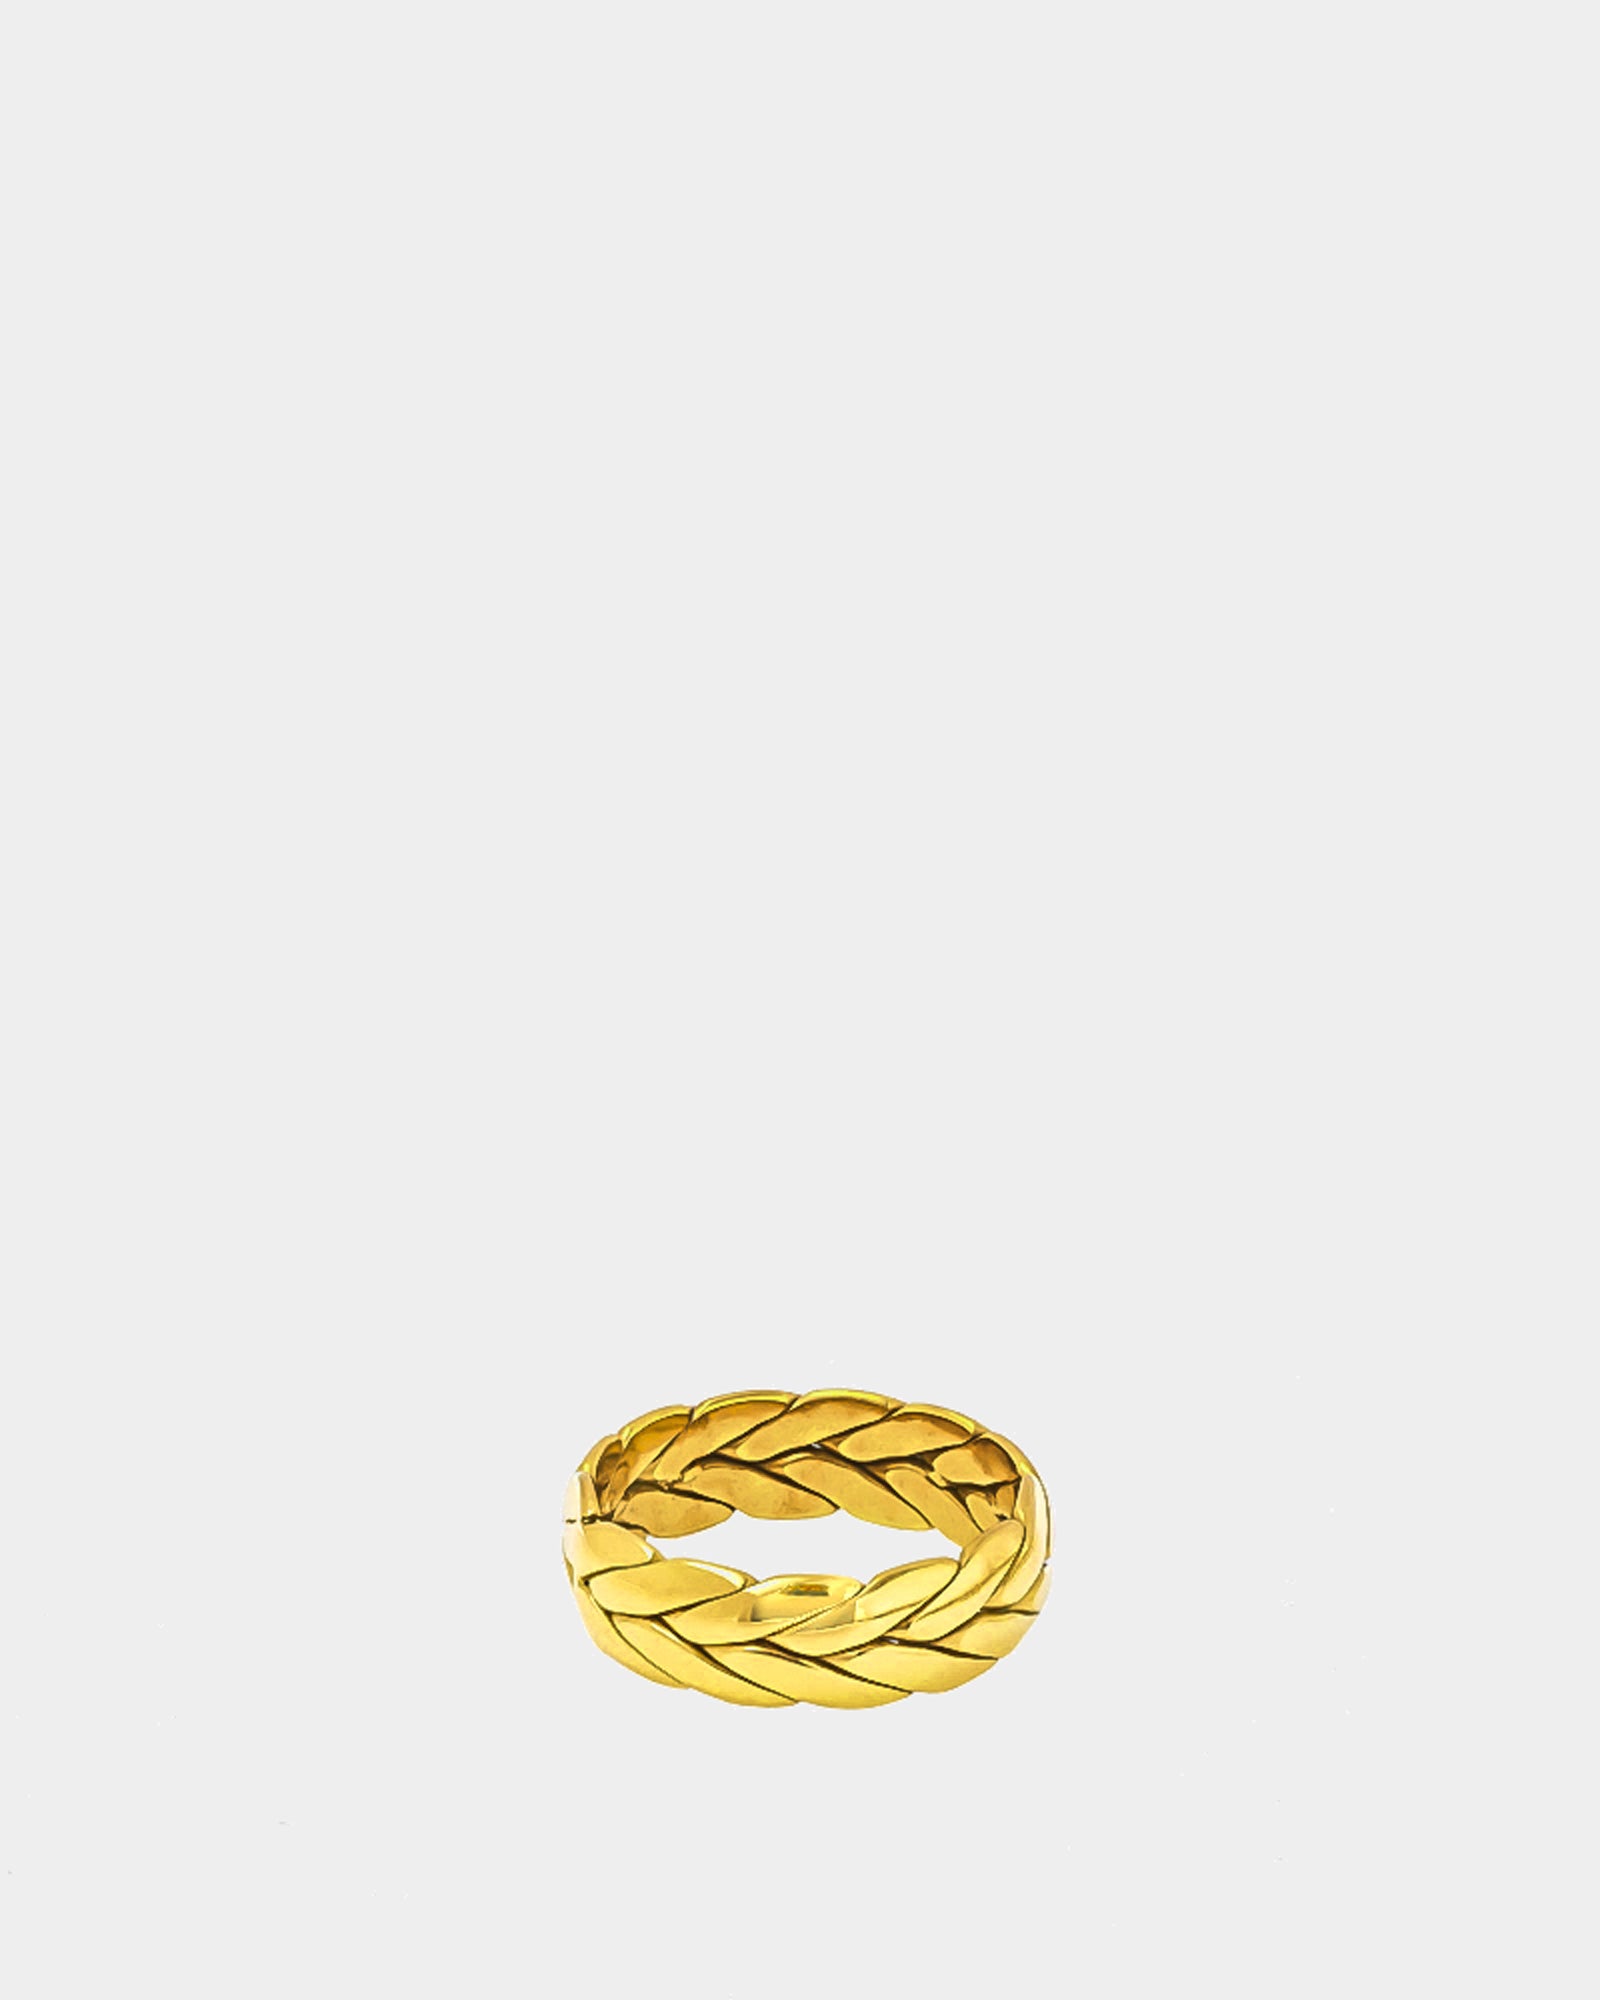 Golden Steel Ring 'Braided' - Buy Rings Online - Dicci